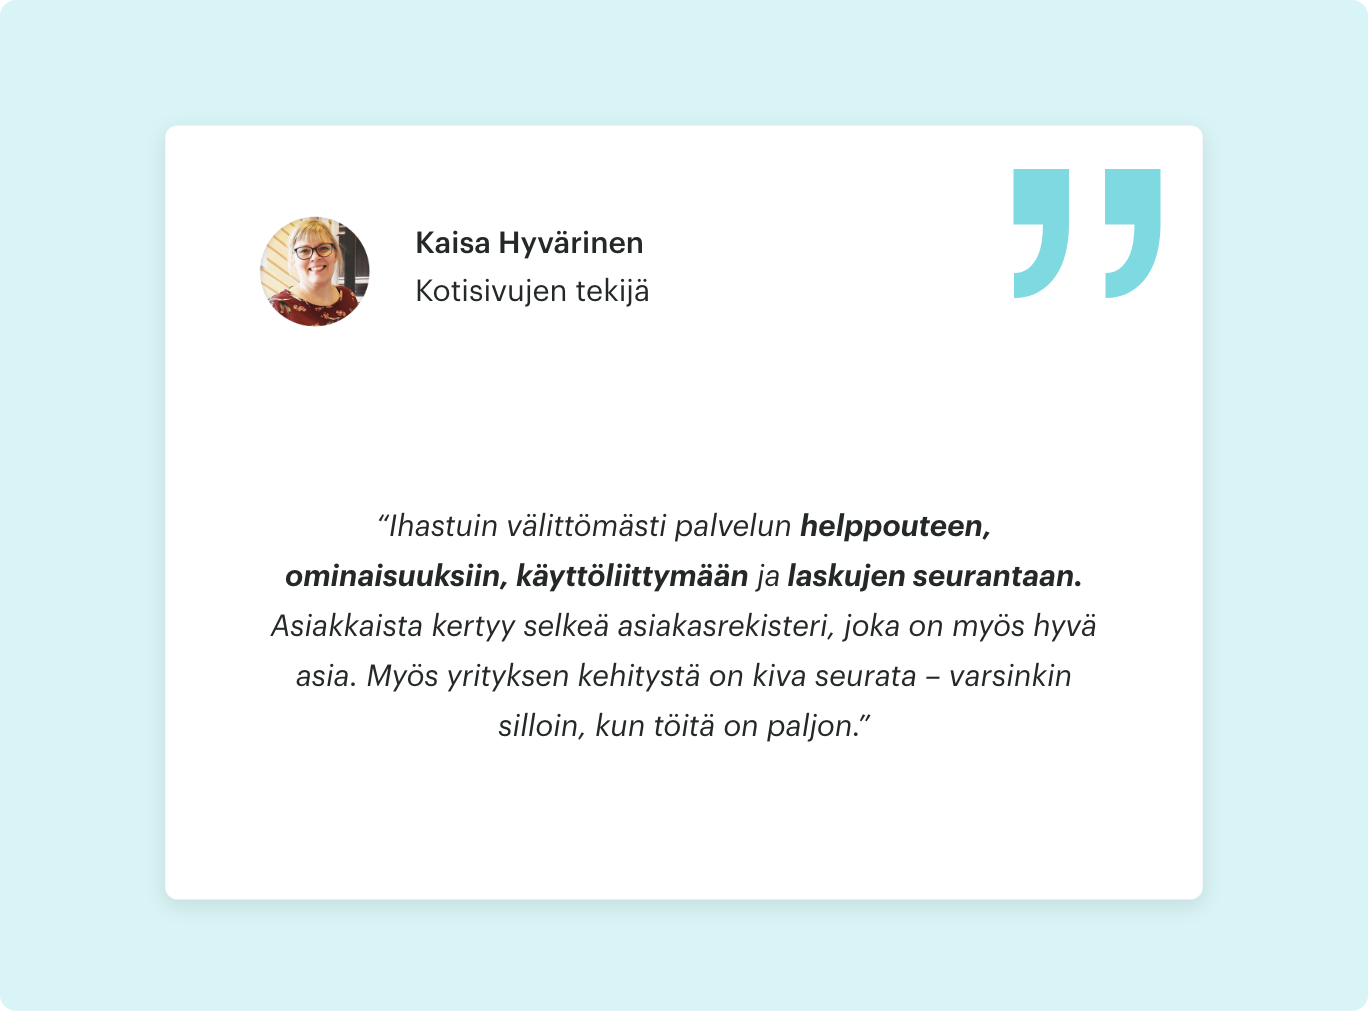 Kaisa Hyvarinen - Mediahuone